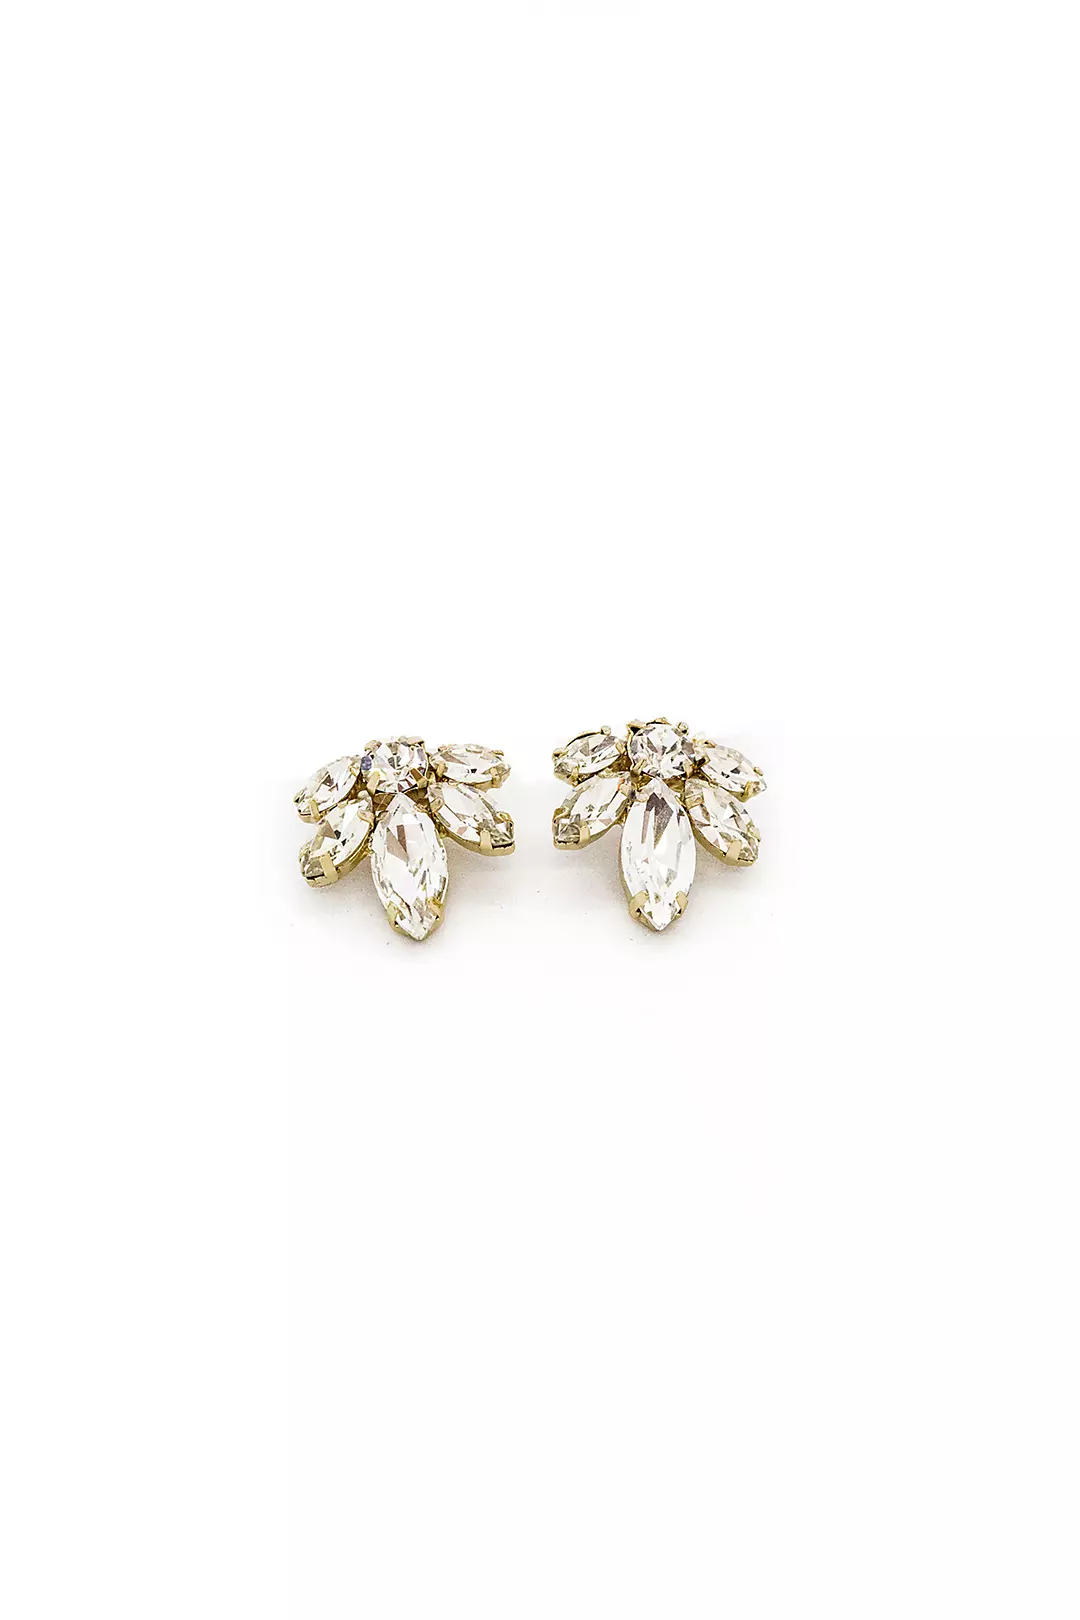 Swarovski Crystal and Sterling Cluster Earrings Image